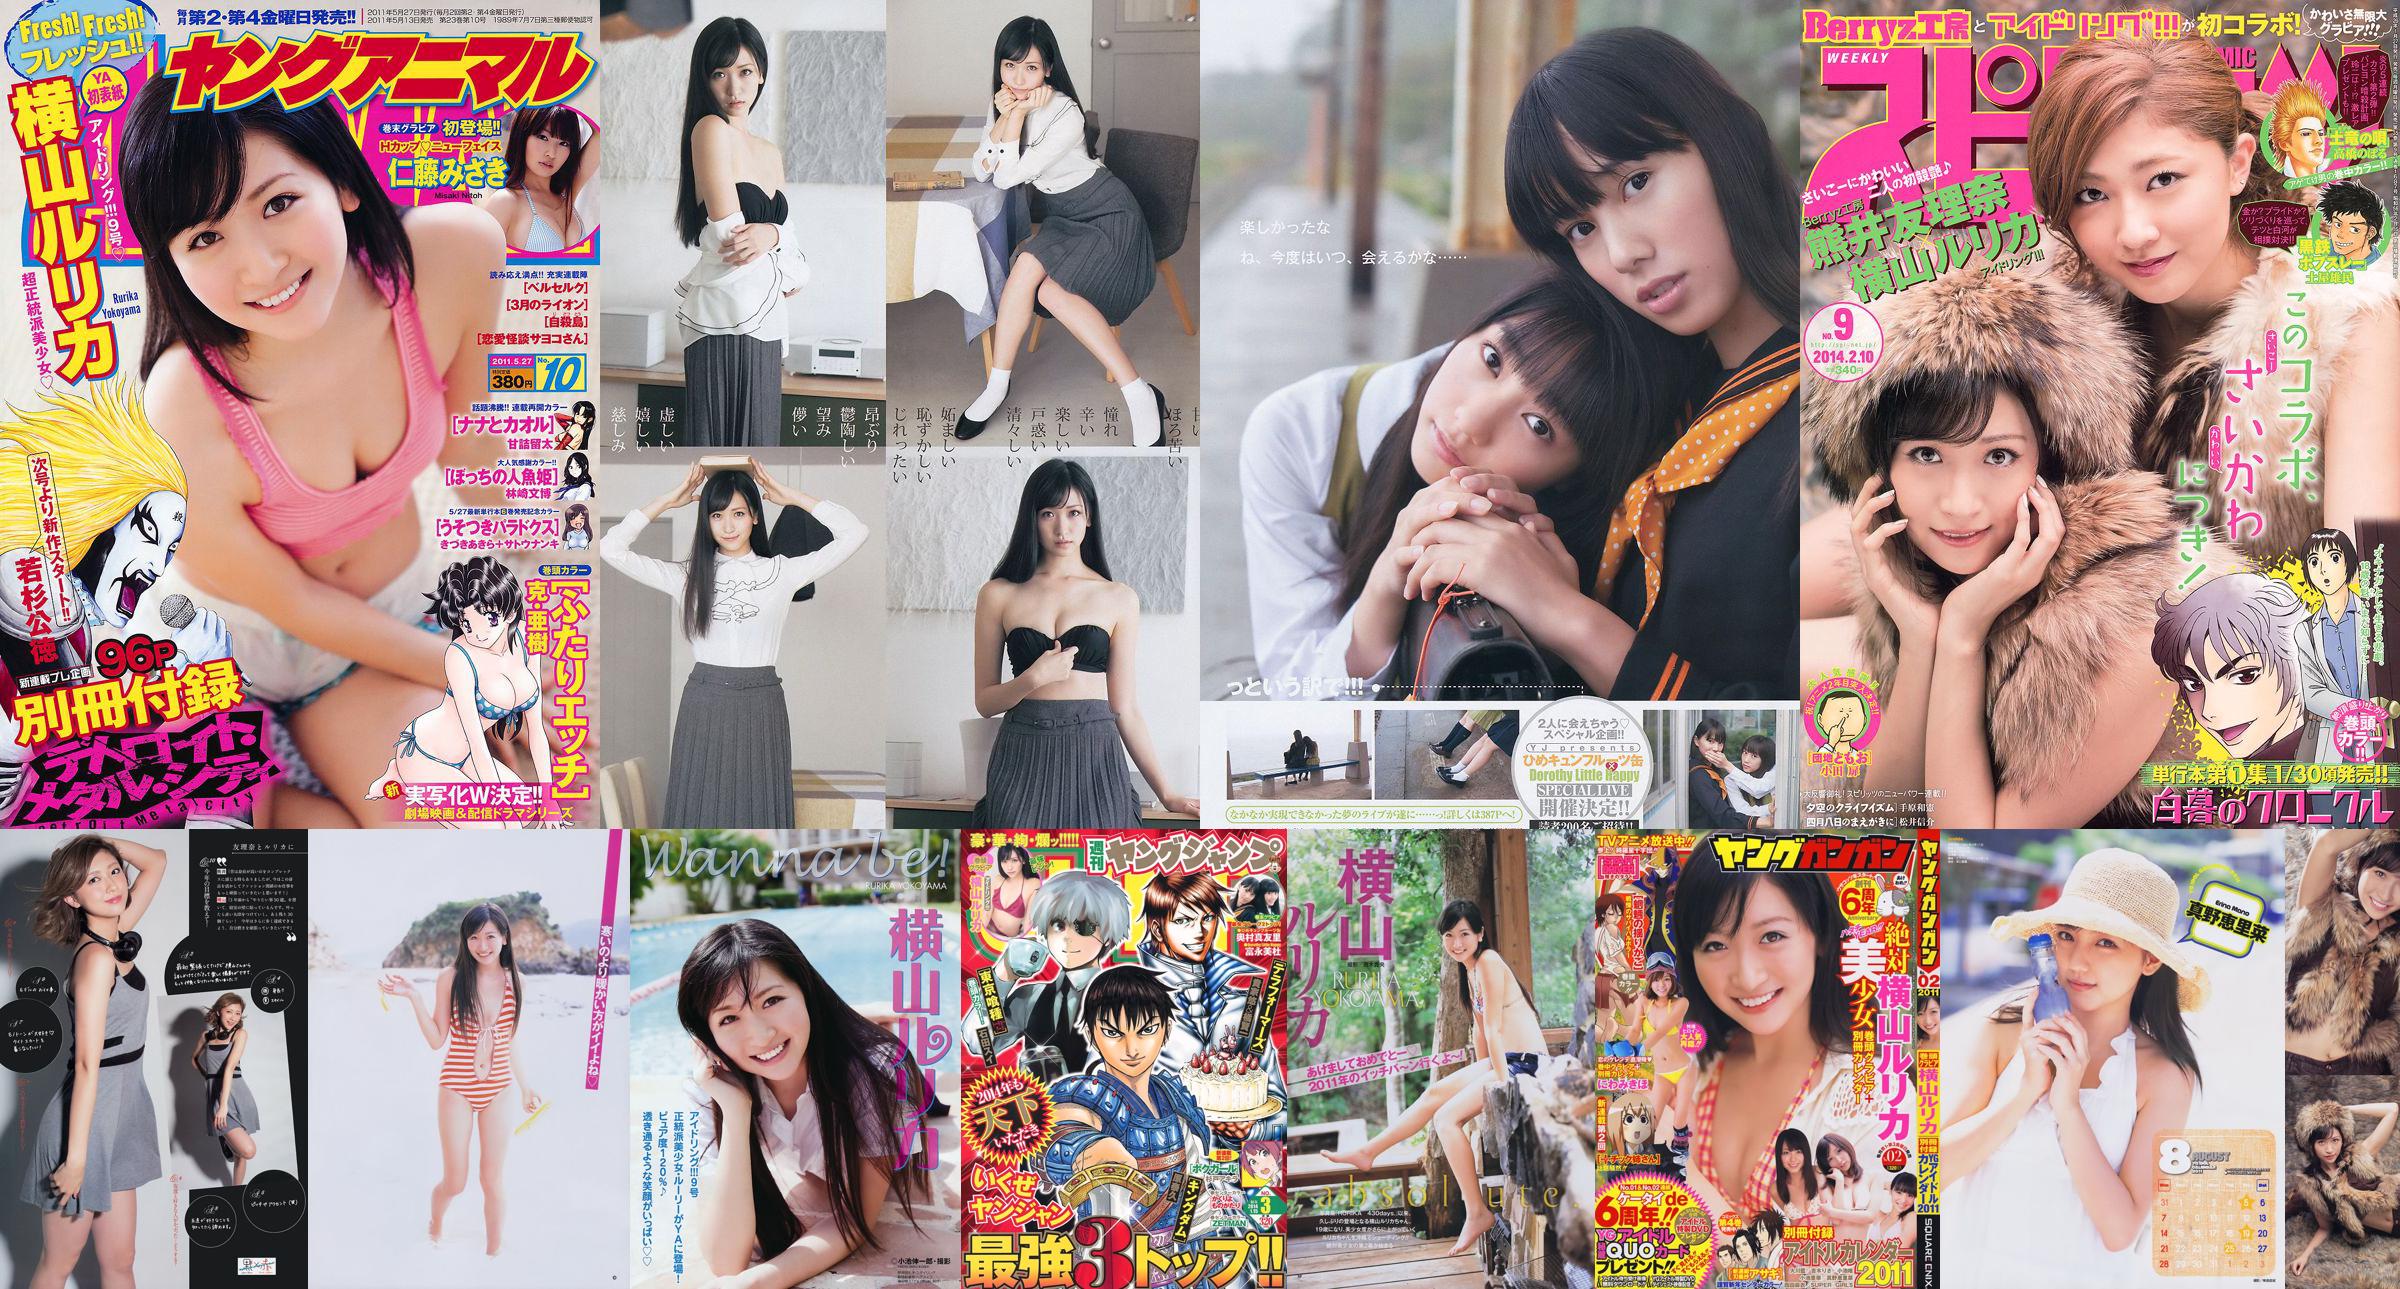 [Grands esprits de la bande dessinée hebdomadaire] Yokoyama Rurika Kumai Yurina 2014 Magazine photo n ° 09 No.0deab5 Page 2